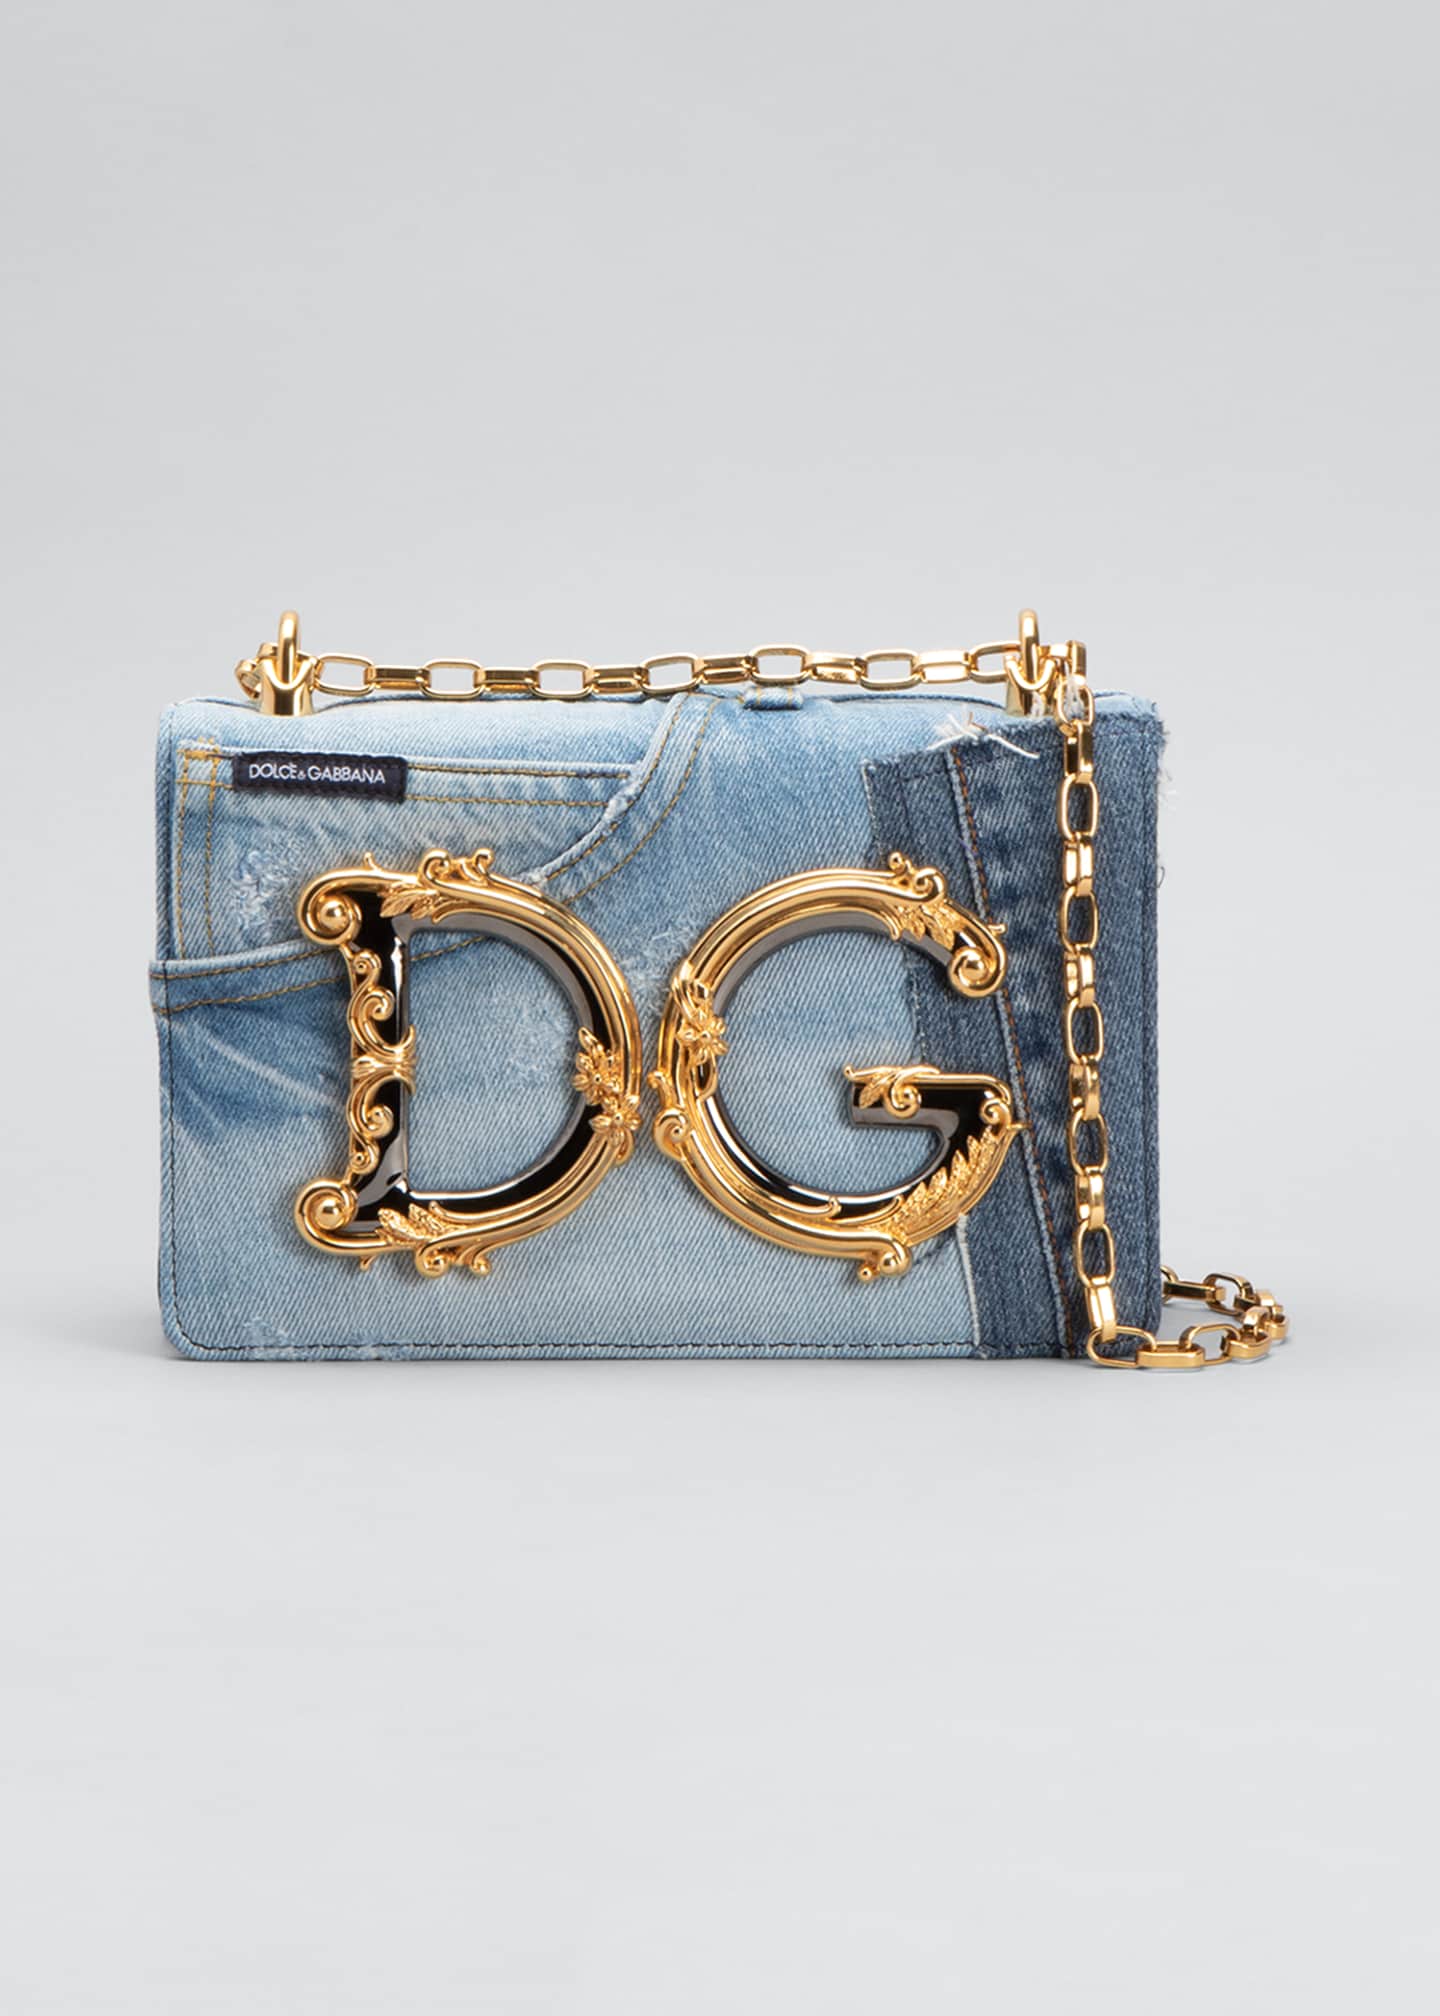 Dolce&Gabbana DG Girls Medium Patchwork Denim Shoulder Bag - Bergdorf